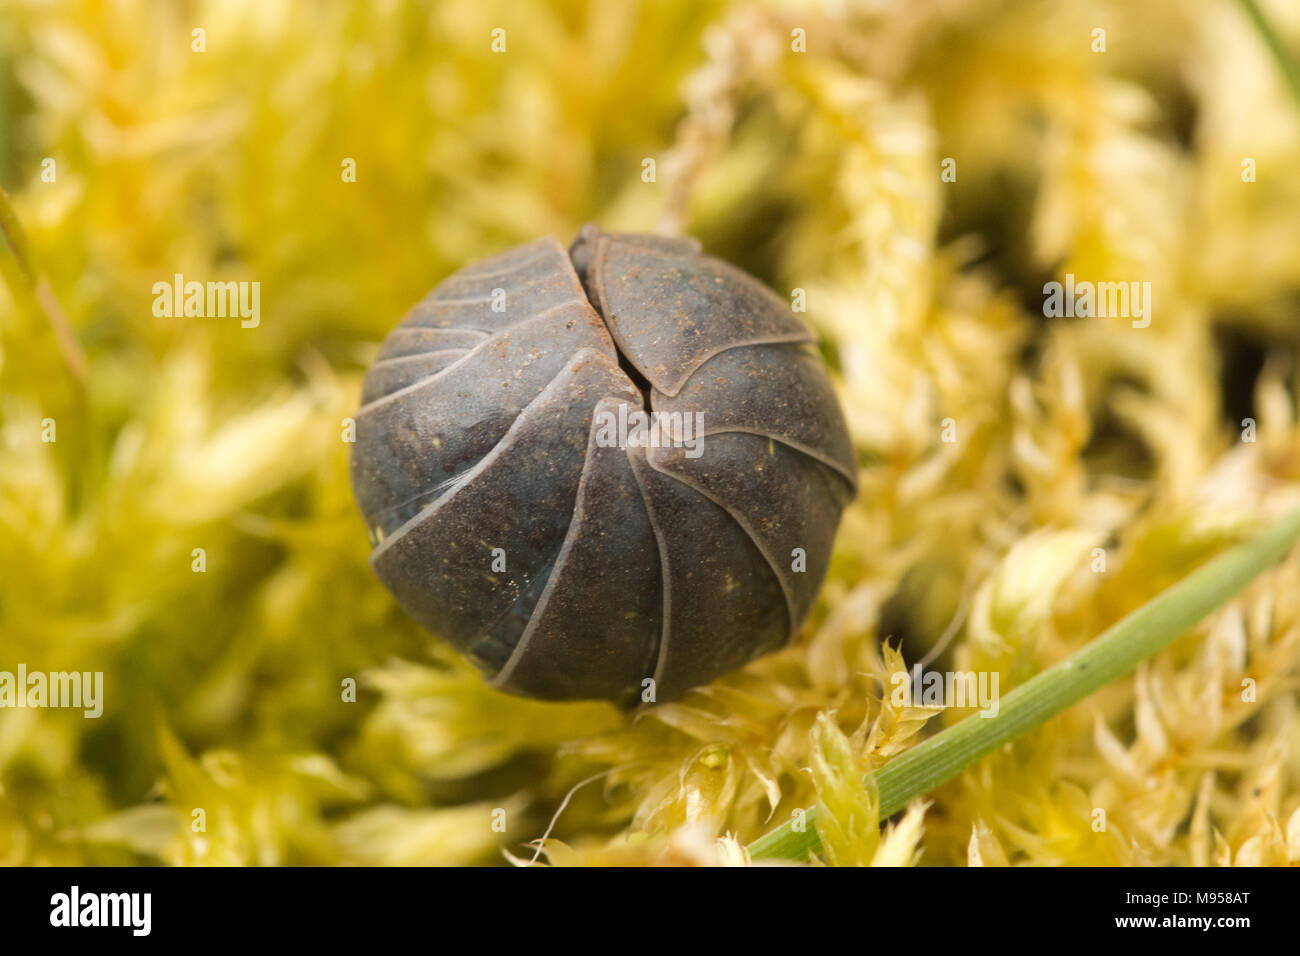 Pille Tausendfüßler (Glomeris marginata) Stockfoto